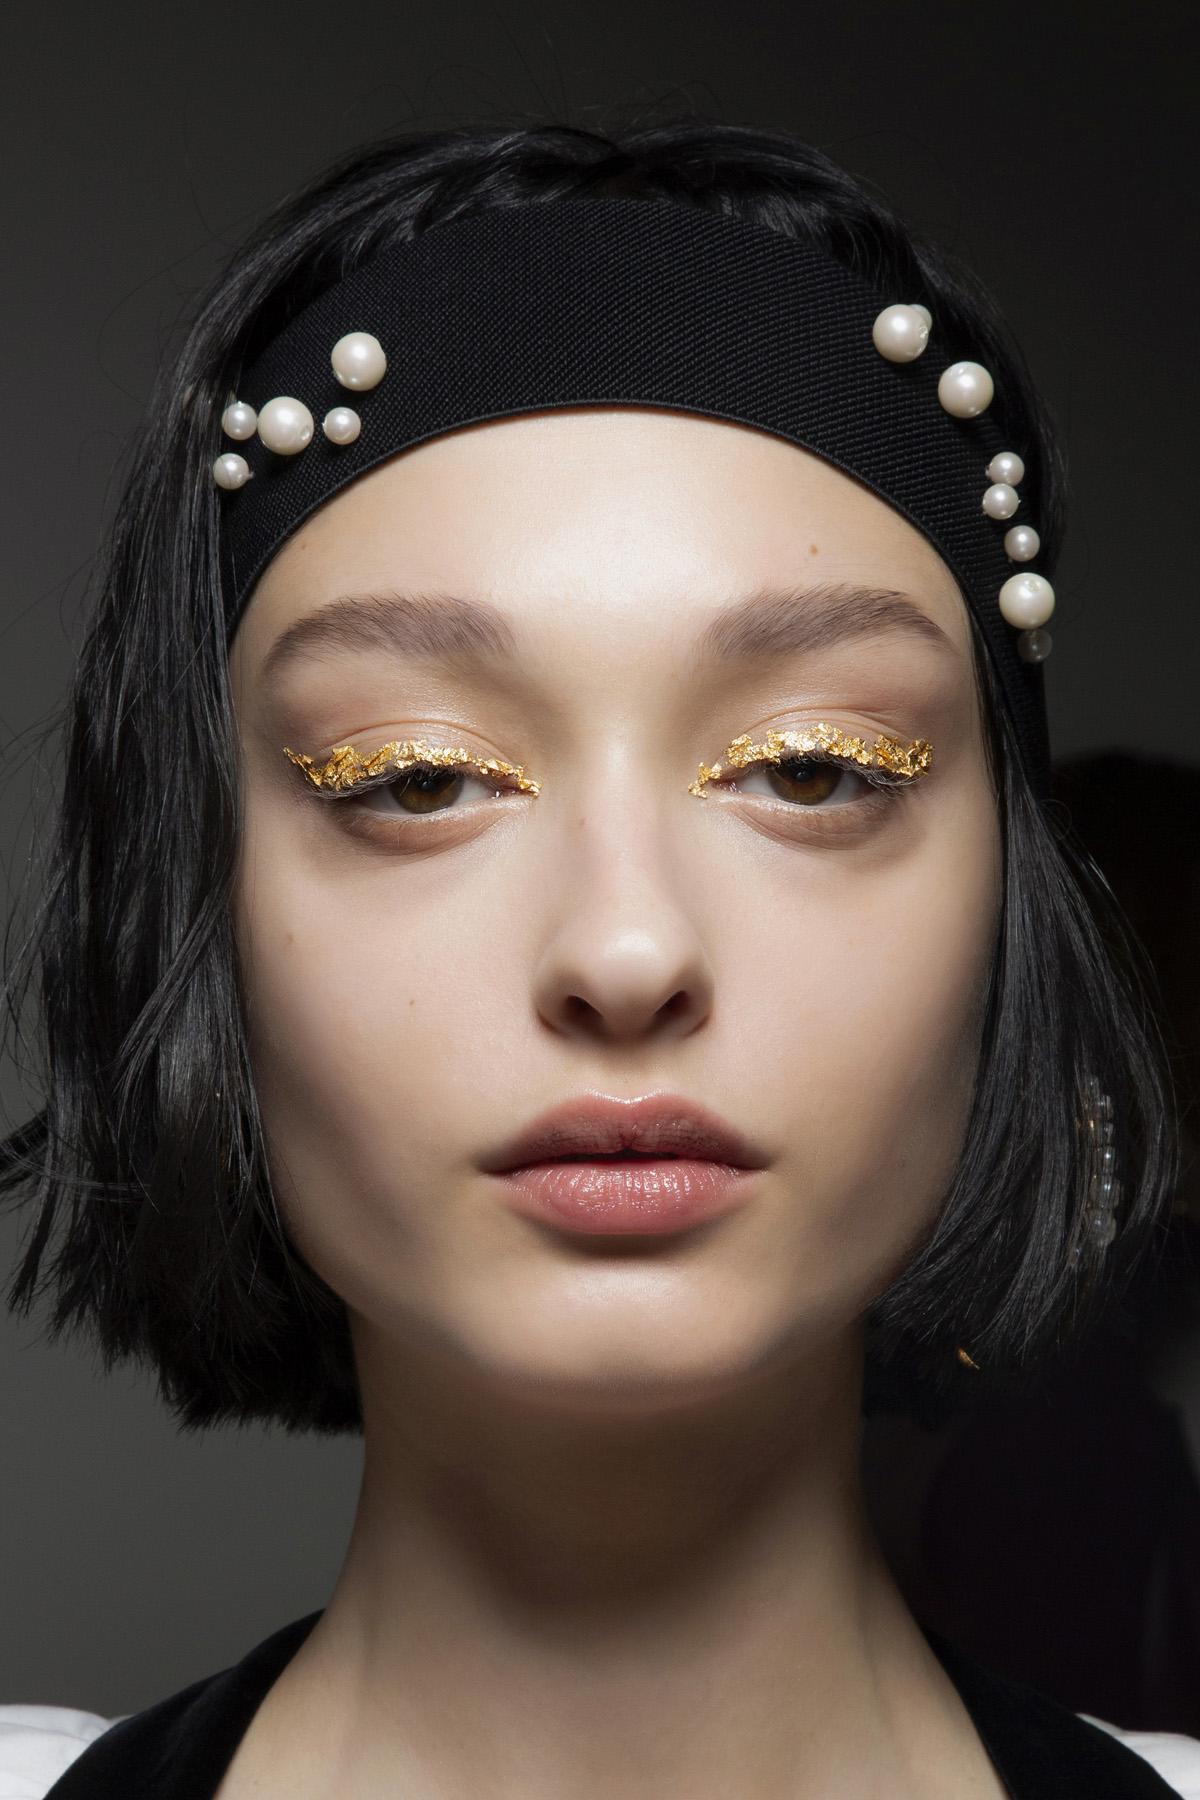 logica holte Behoren Partyproof: 6 x make-up looks die je ogen laten poppen